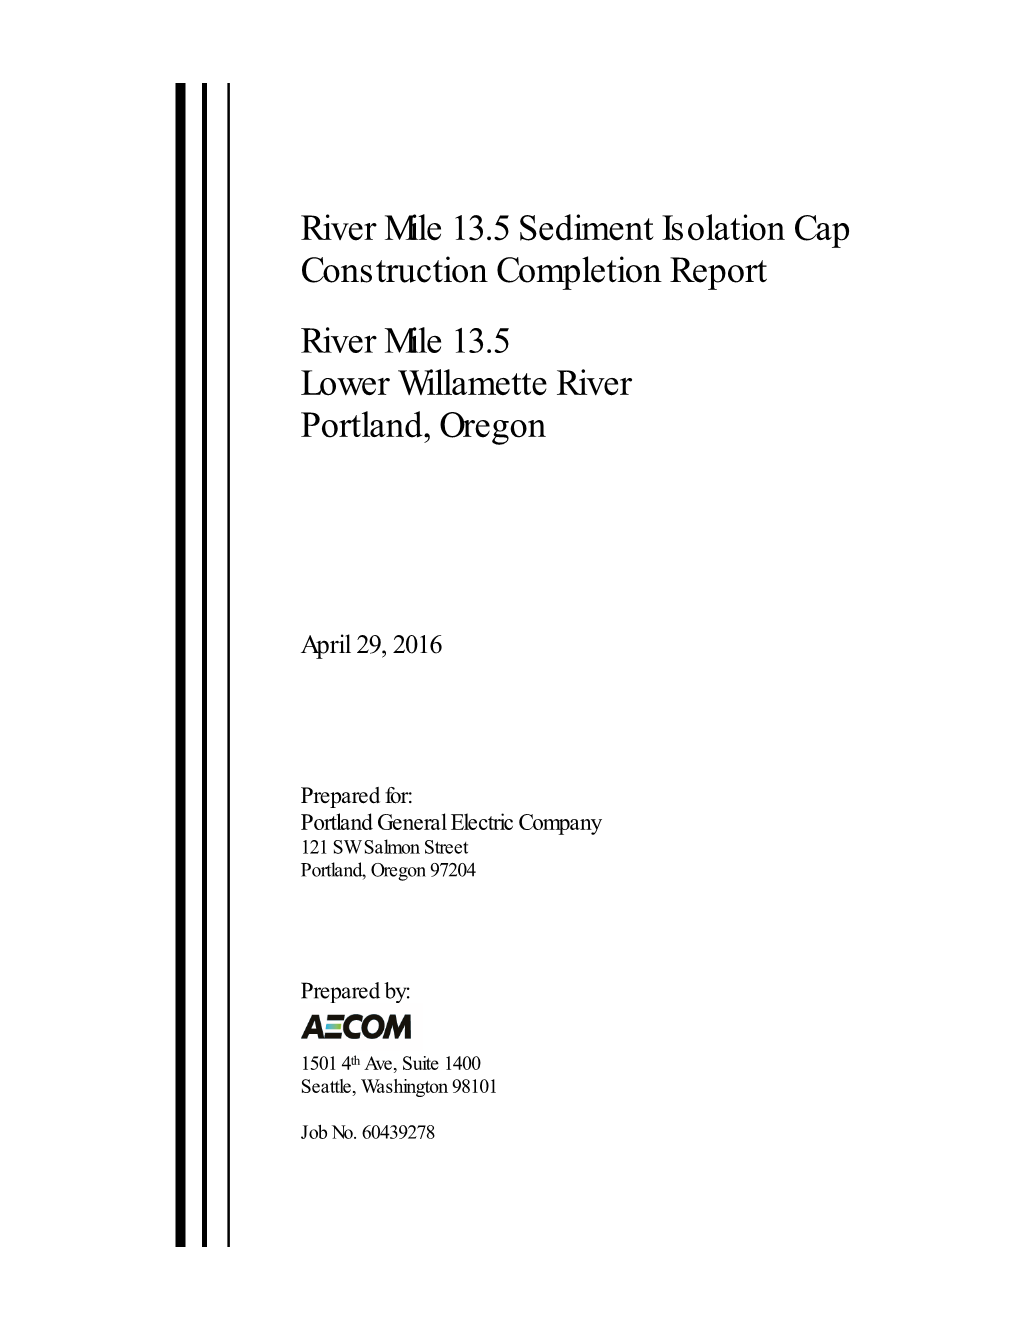 River Mile 13.5 Sediment Isolation Cap Construction Completion Report